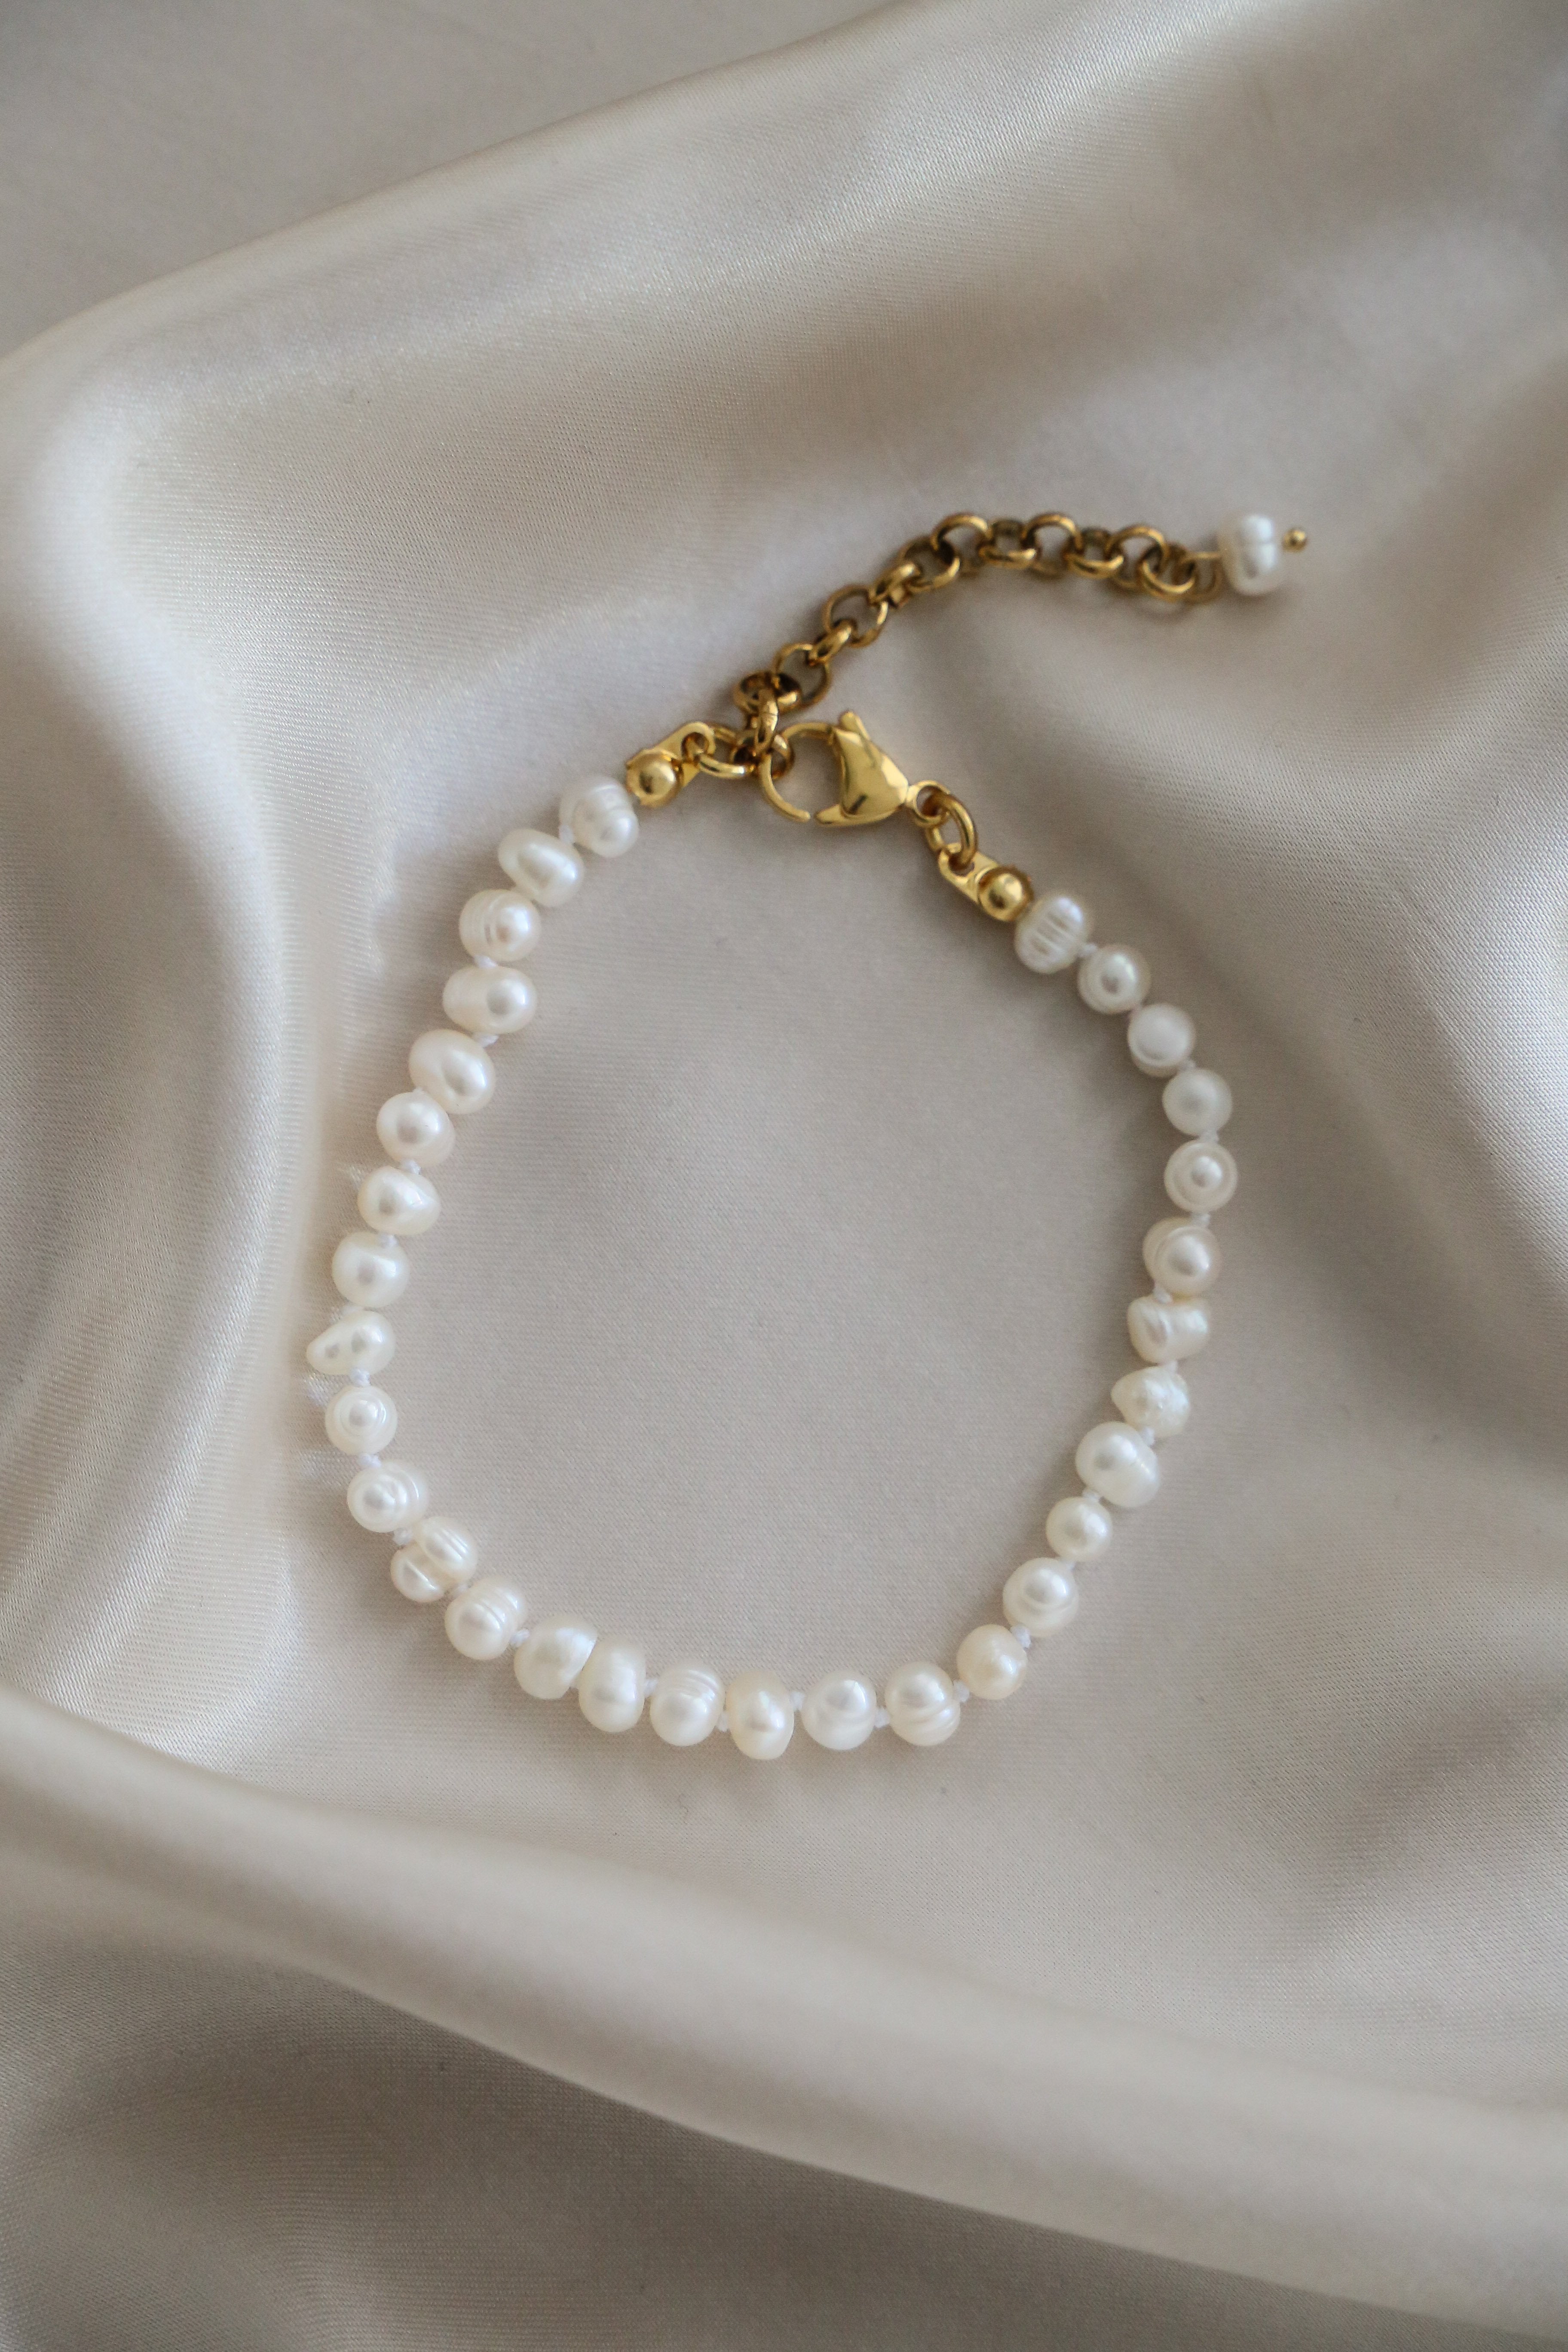 Elba Anklet - Boutique Minimaliste has waterproof, durable, elegant and vintage inspired jewelry